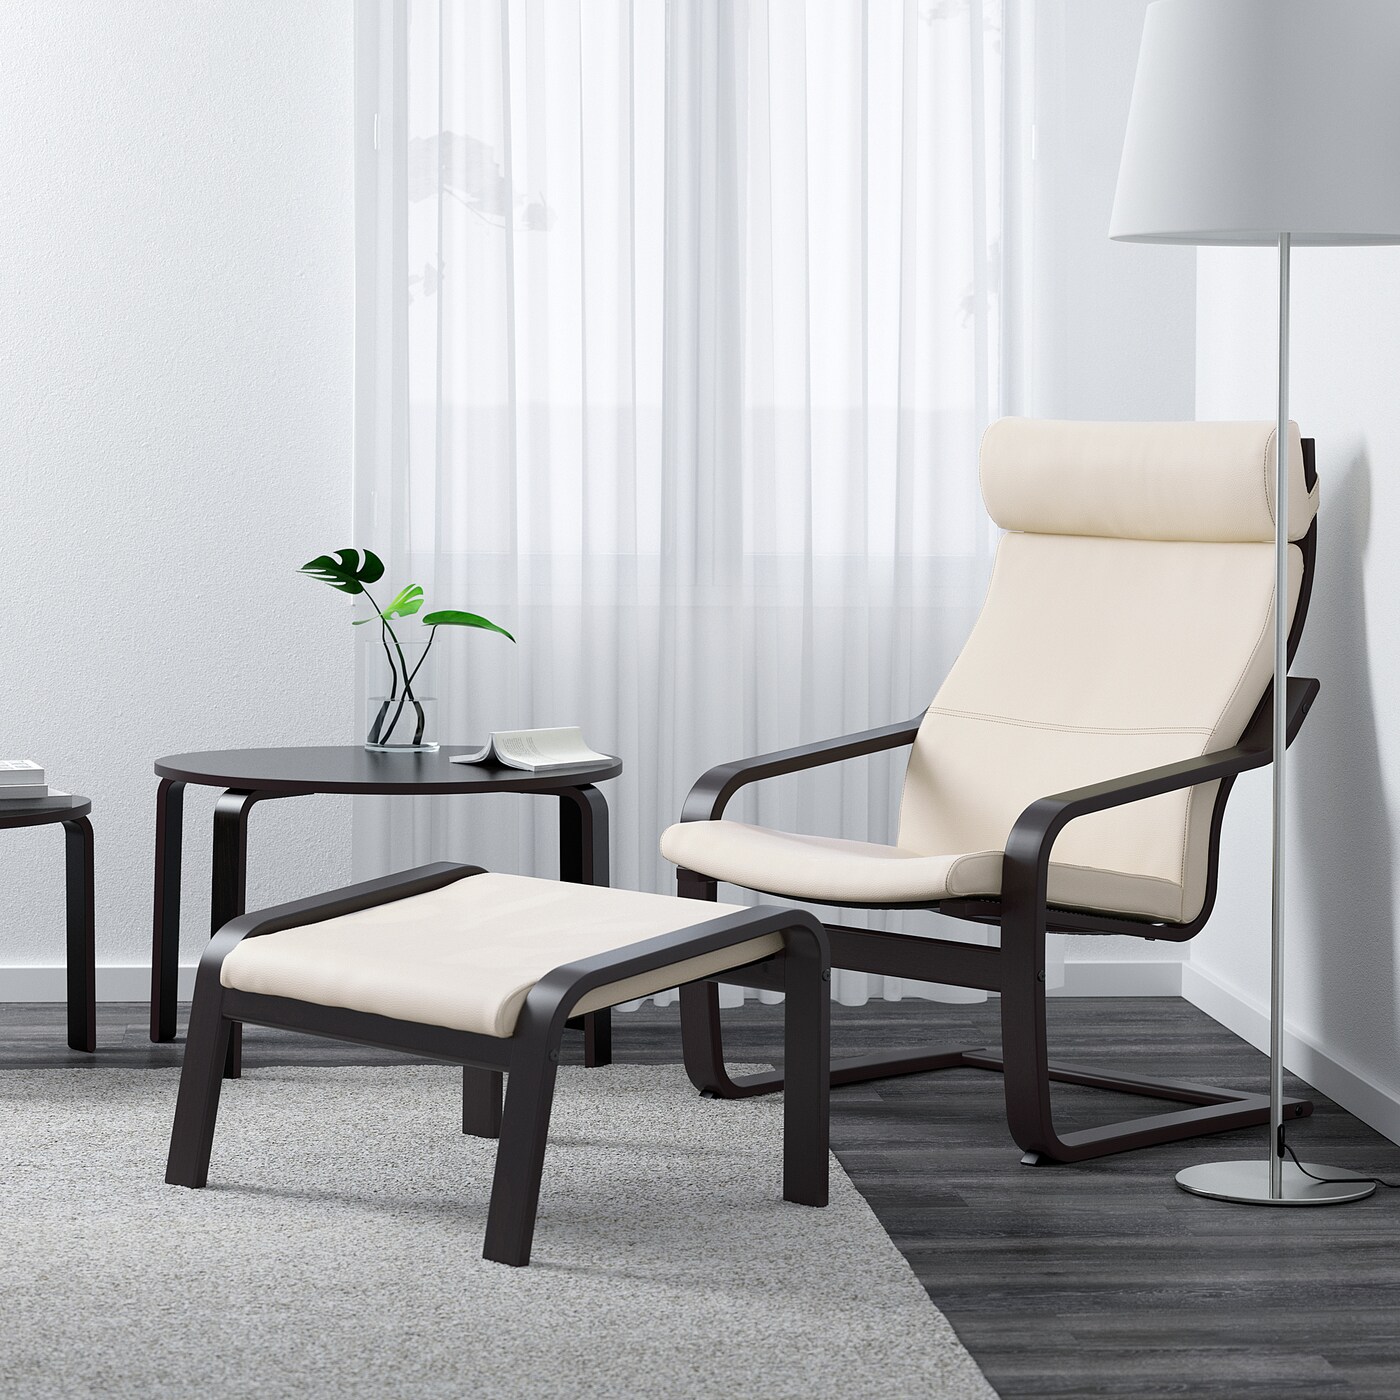 IKEA POÄNG Chair